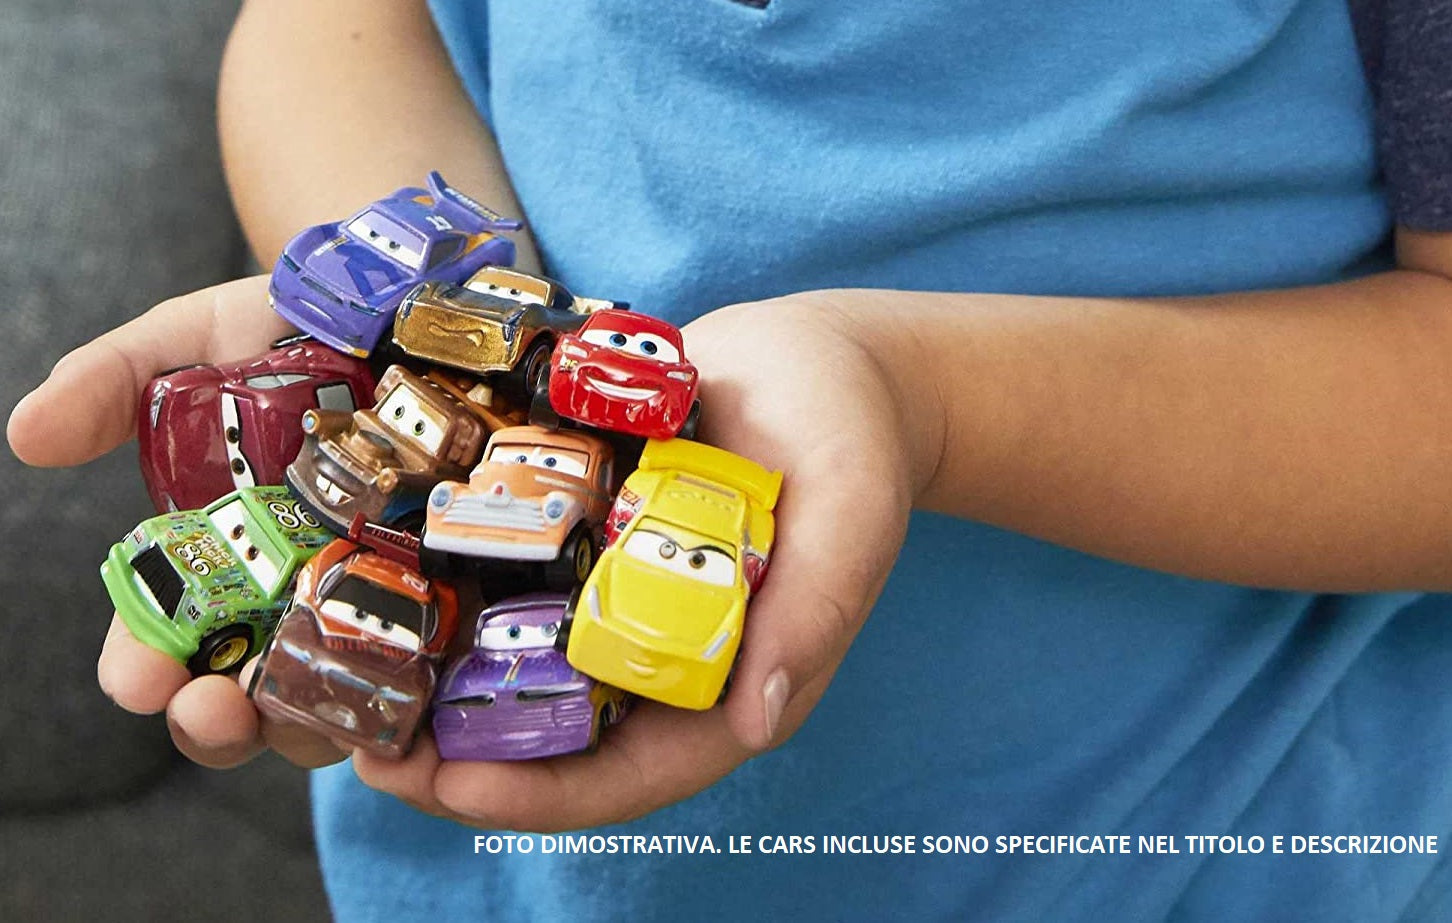 Disney Cars Mini Racers - Damaged King / Lightning McQueen / Chick Hicks